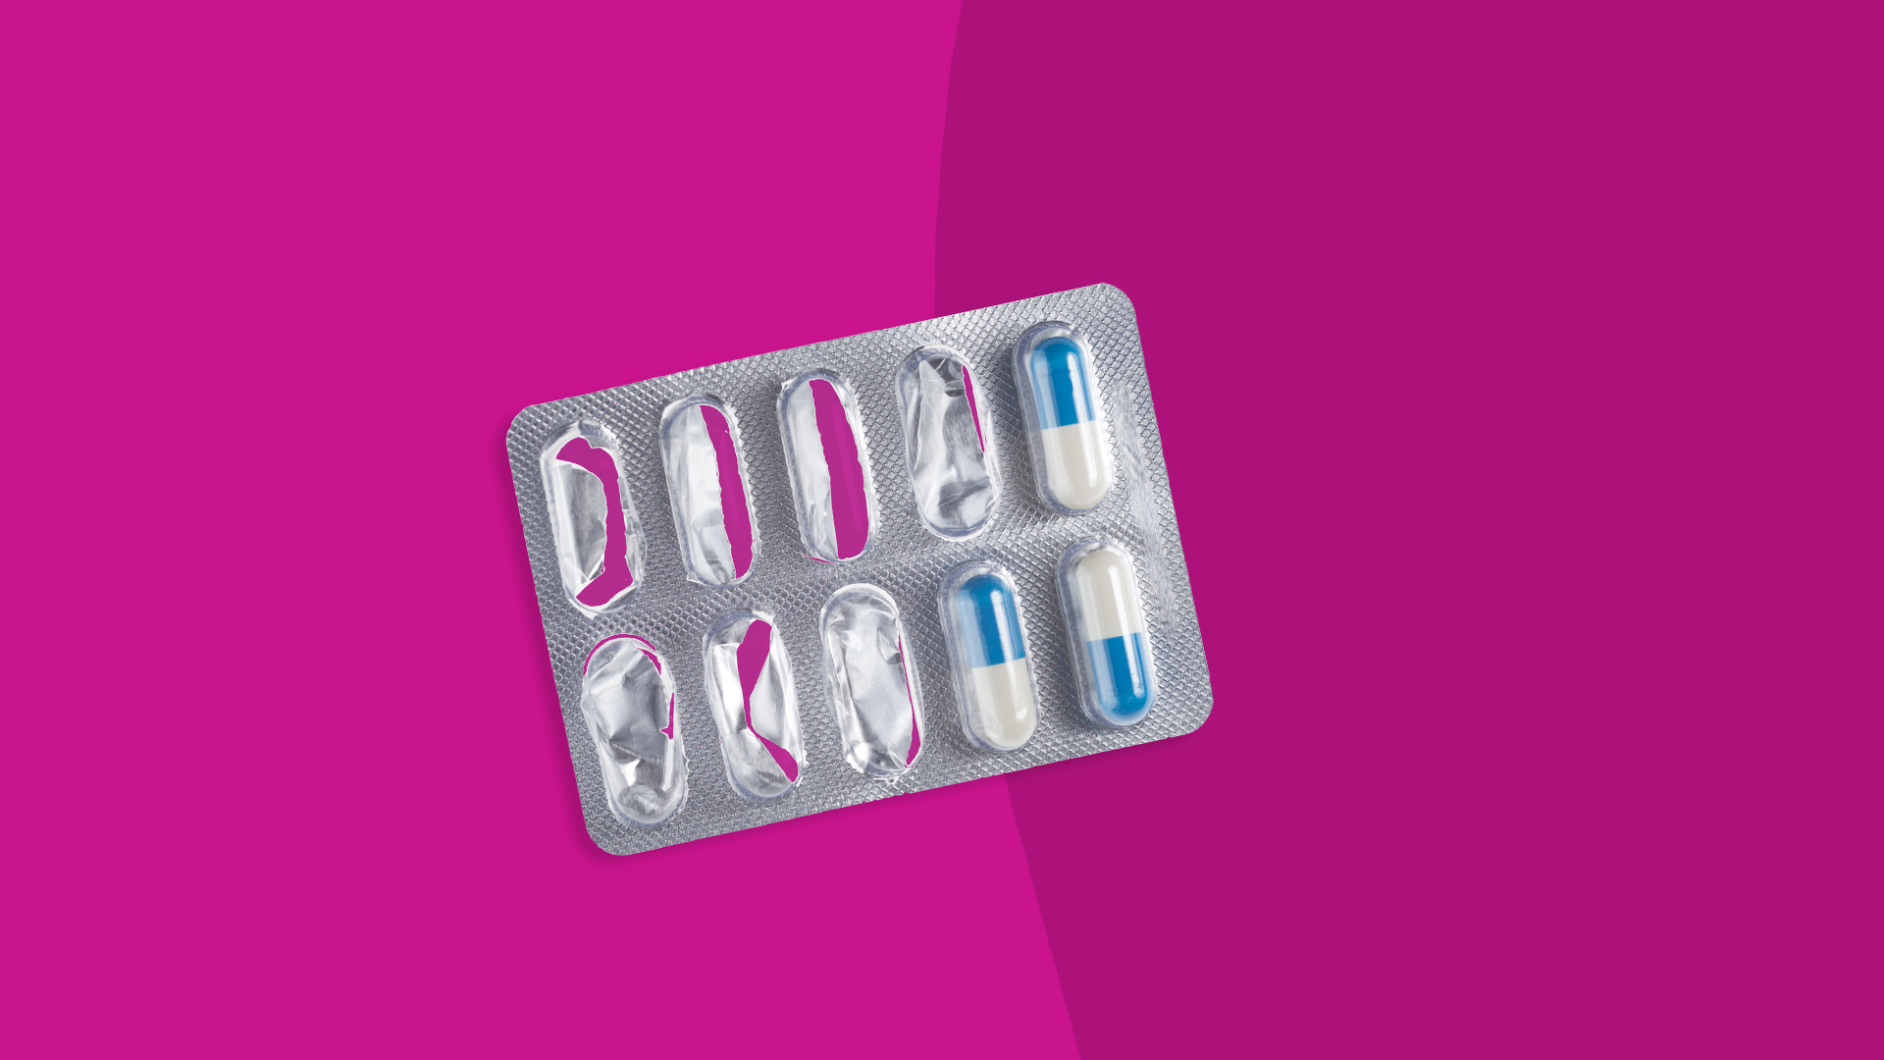 Foil of Rx pills: What is a z-pak?